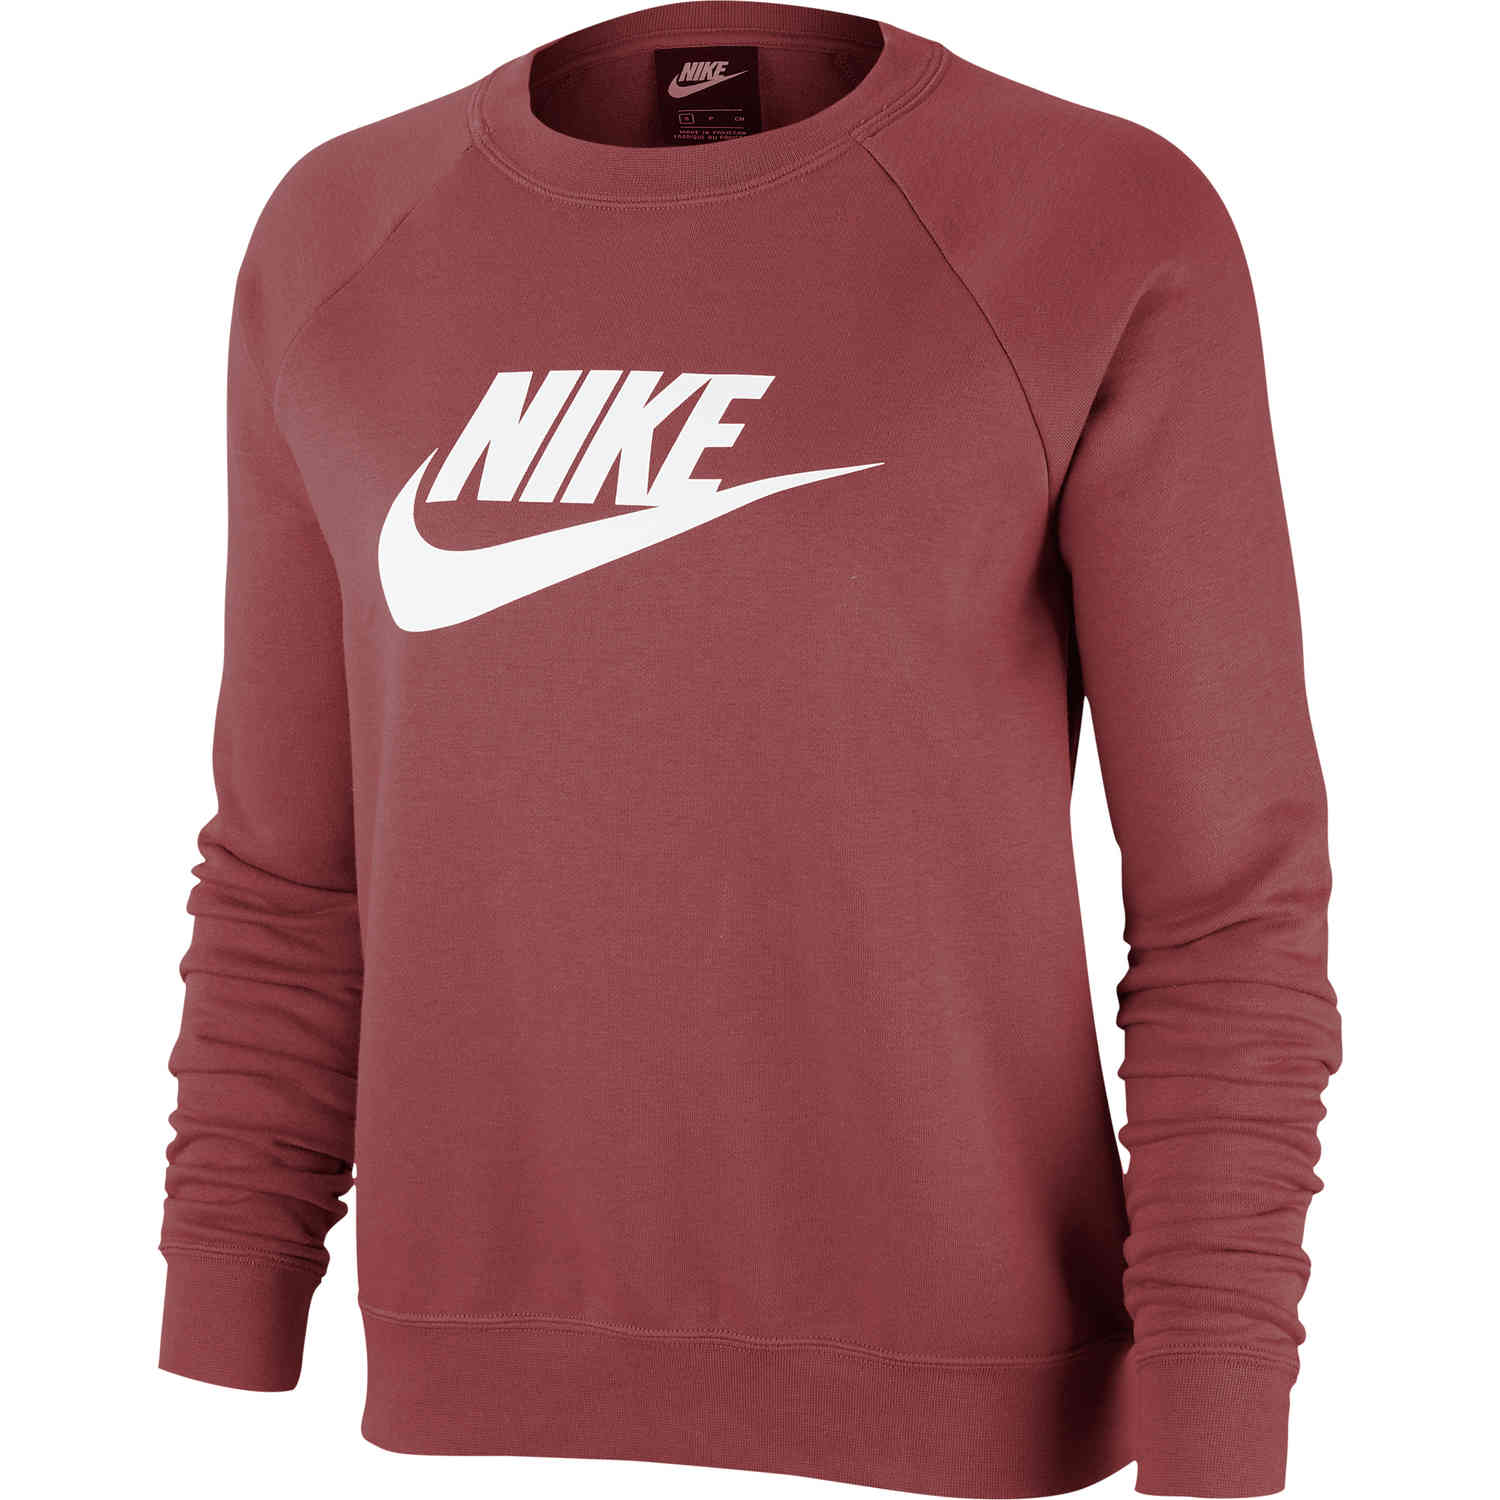 Womens Nike Essential Fleece Crew 